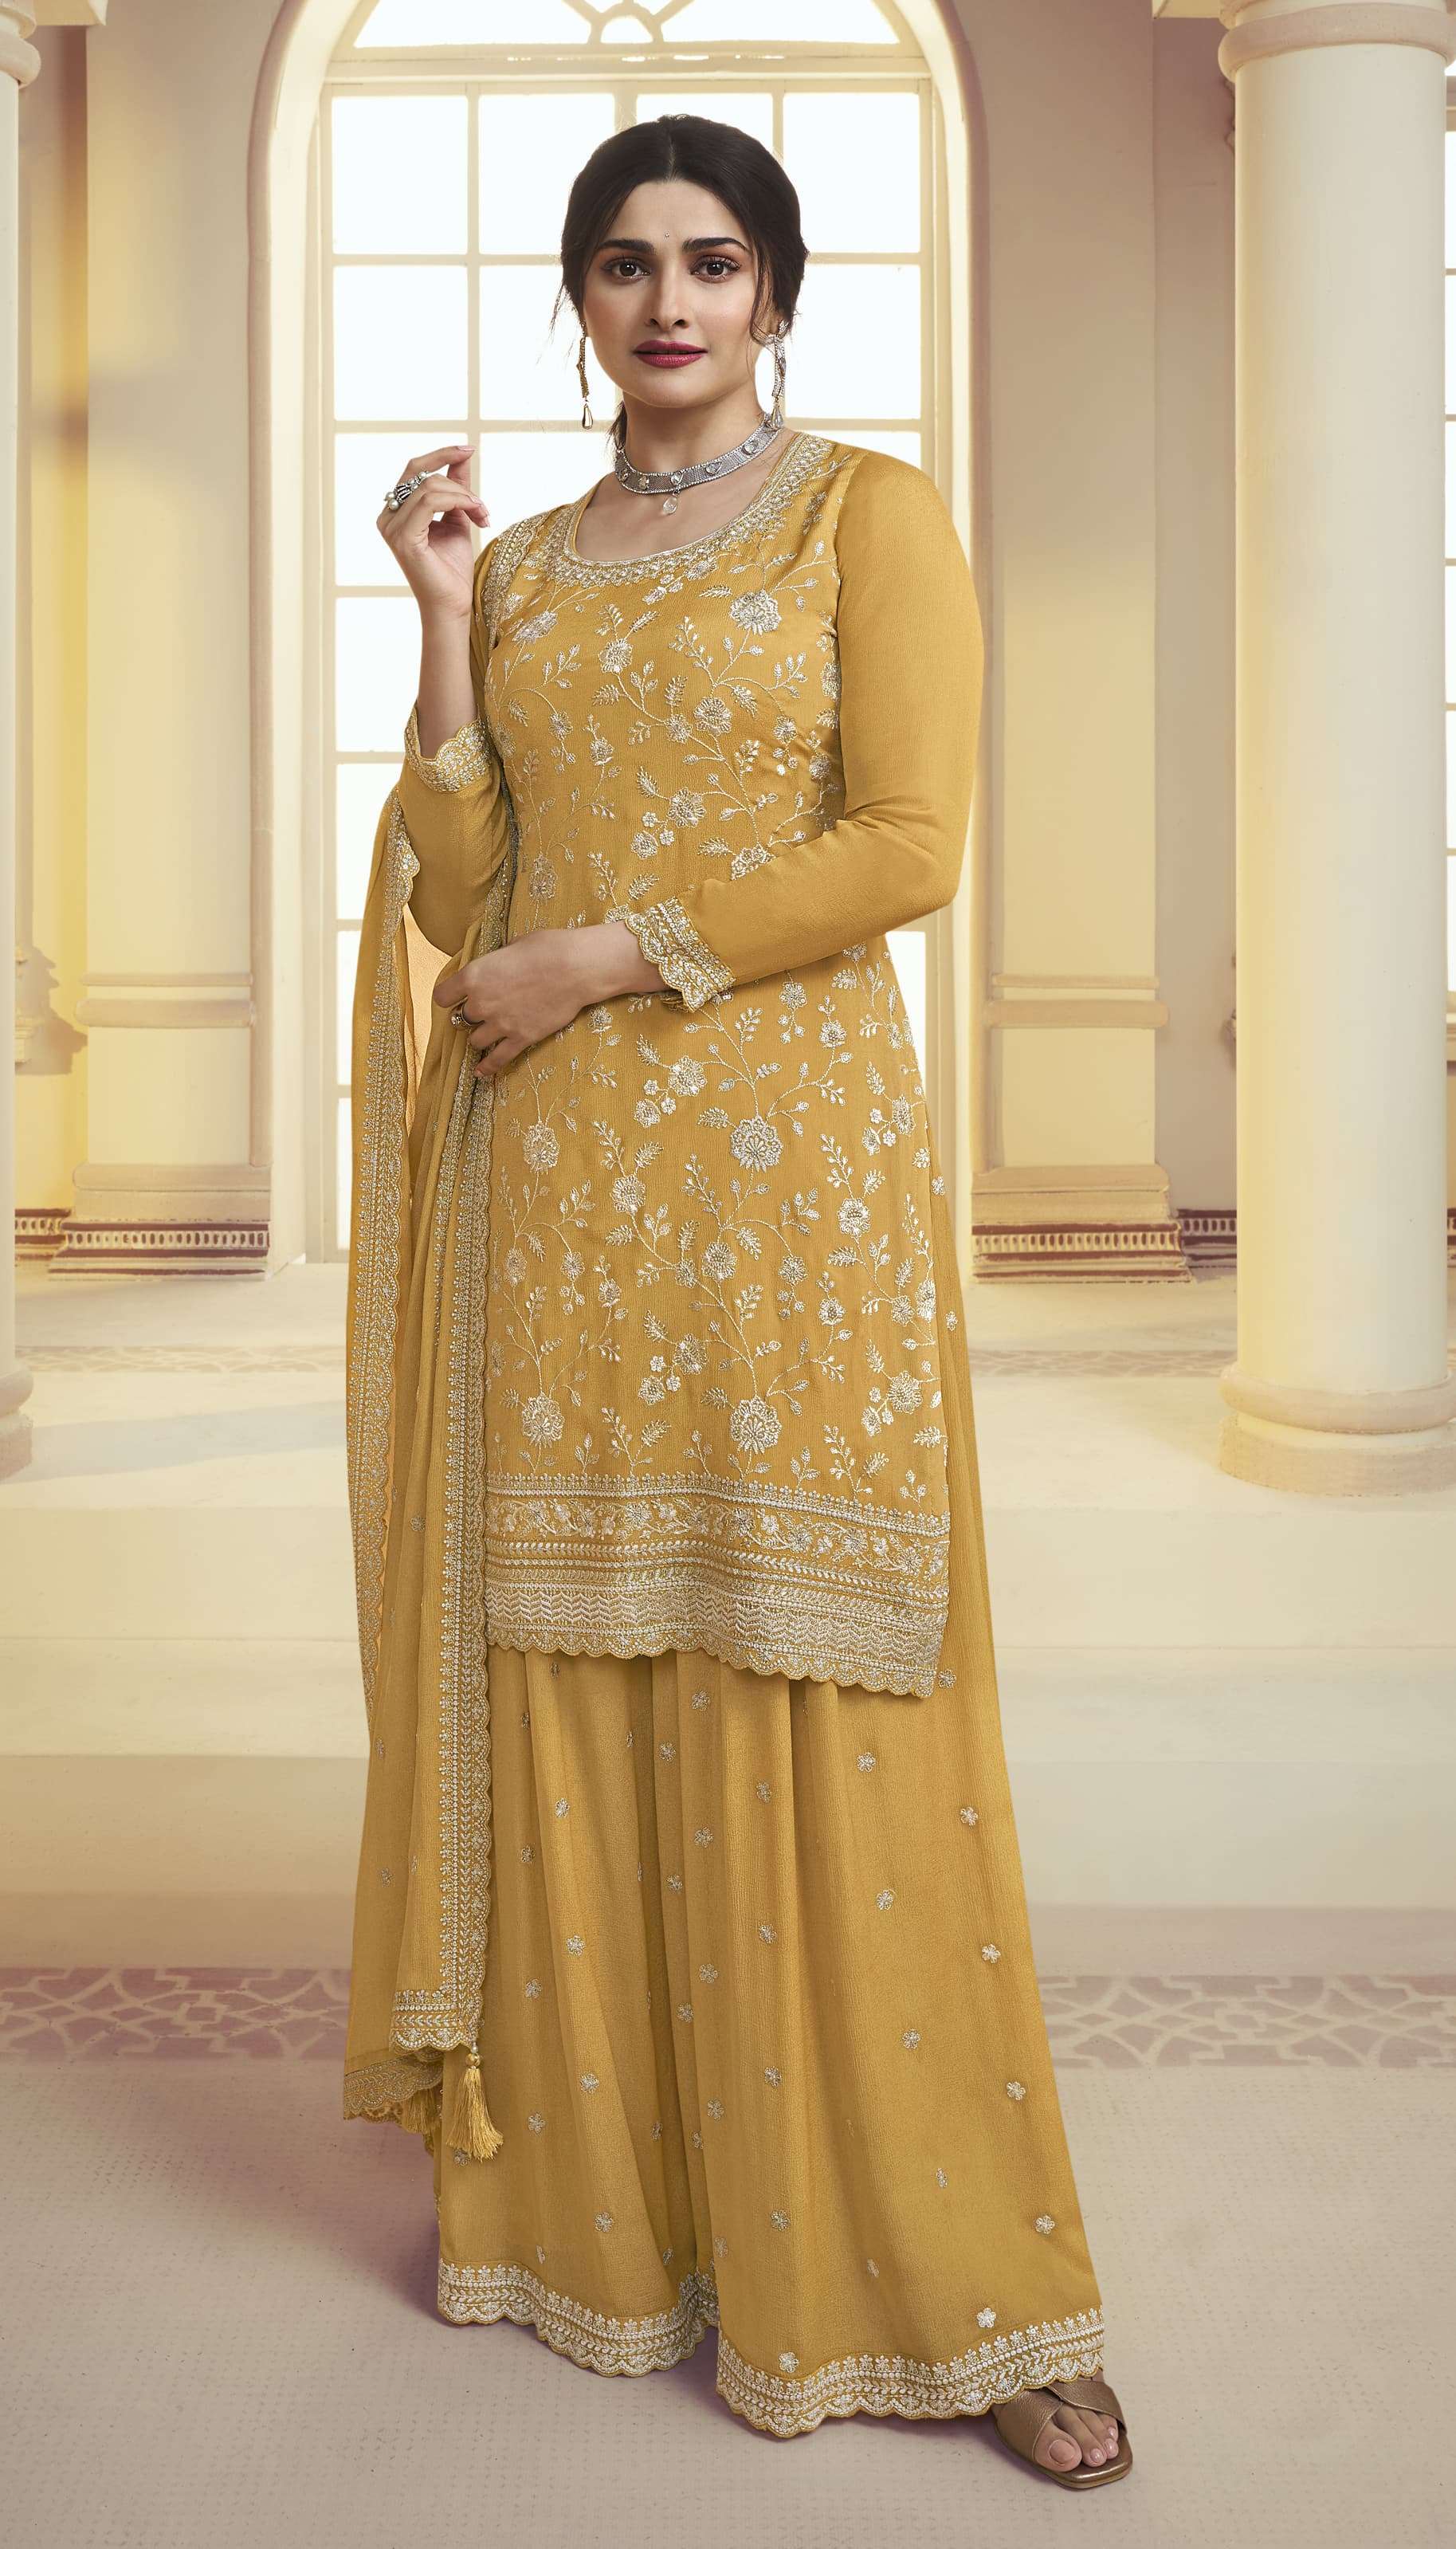 Suhaani Buy Kuleesh Vinay Fashion Wholesale Online Lowest Price Sharara Salwar Suit Sets